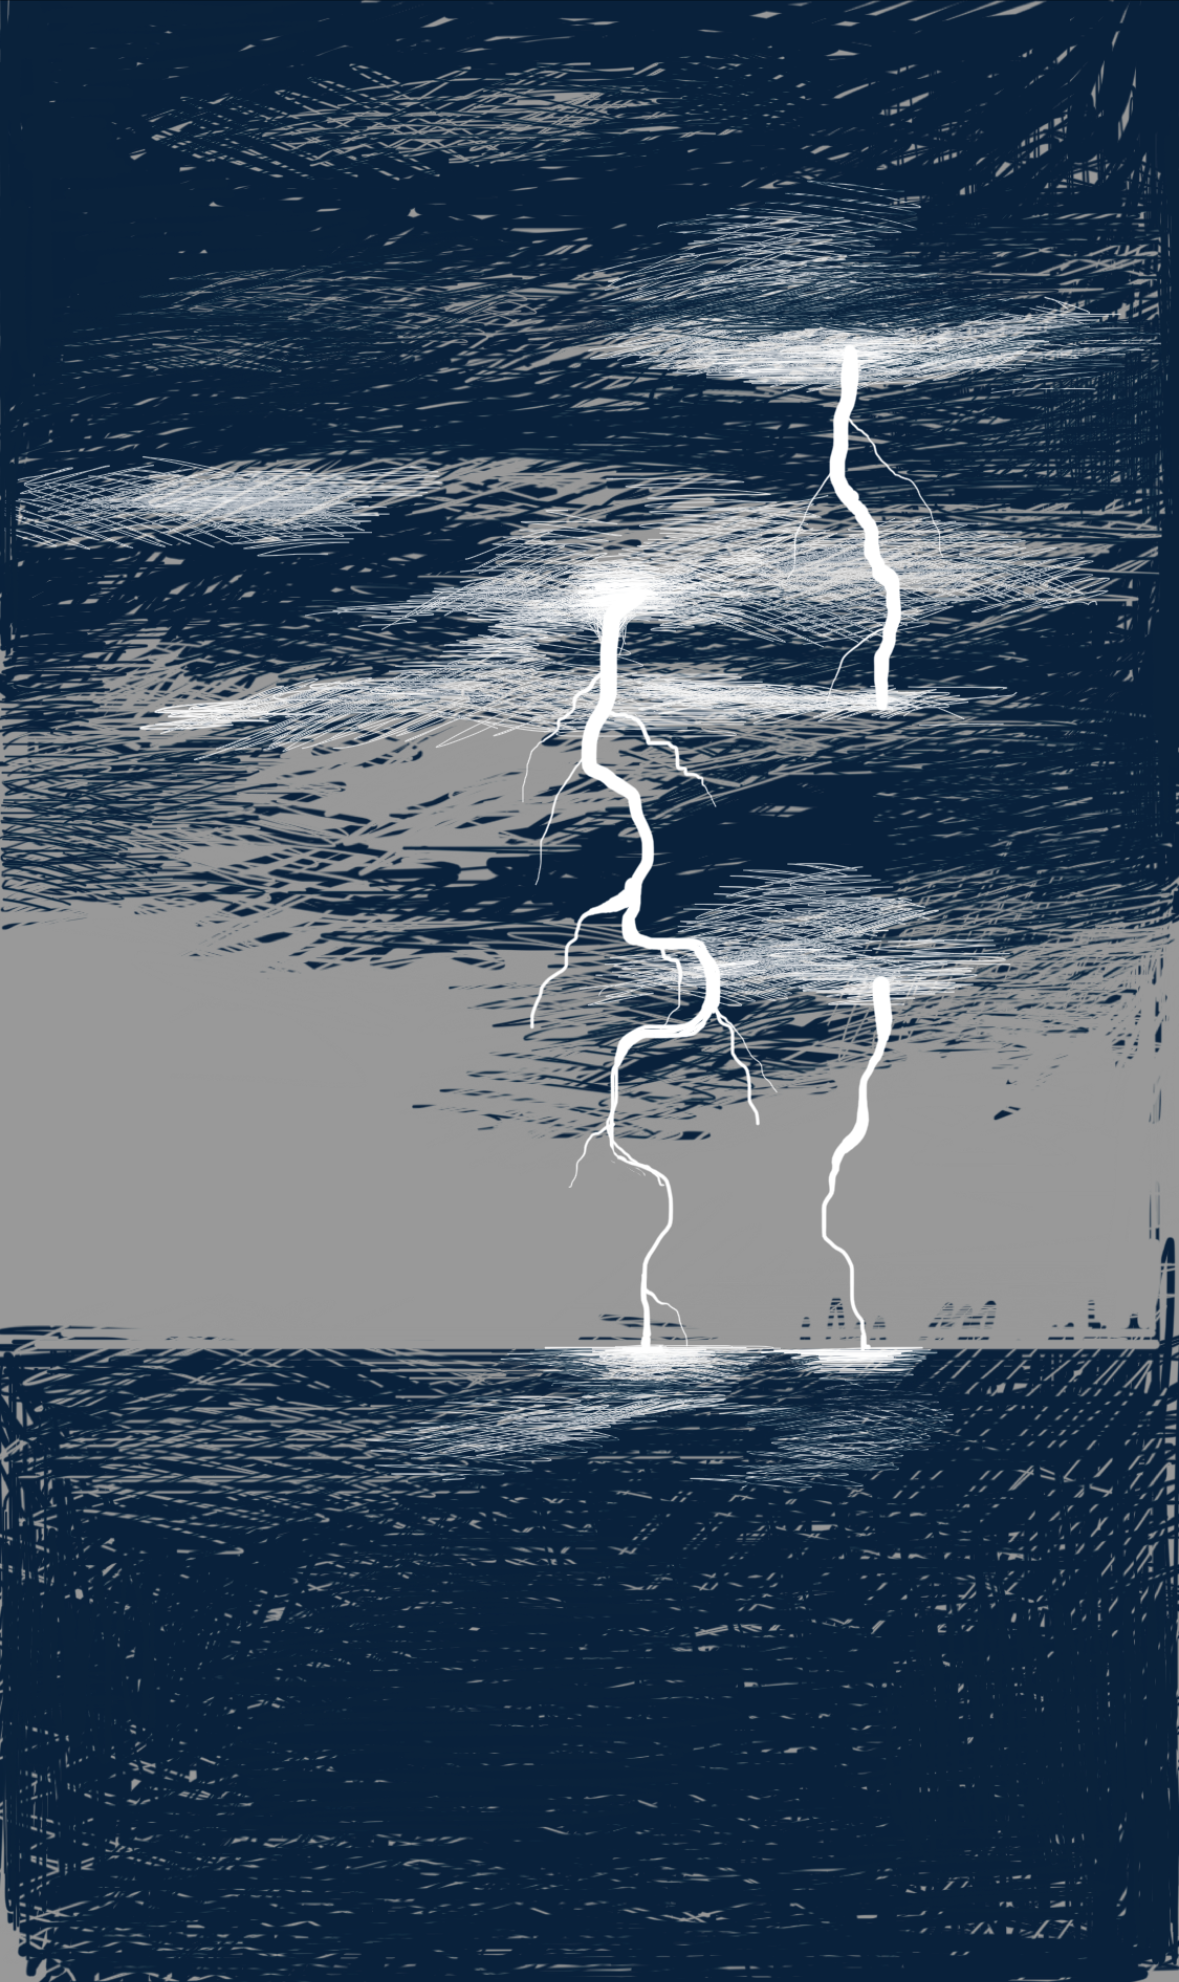 A lightning bolt strikes over a plain